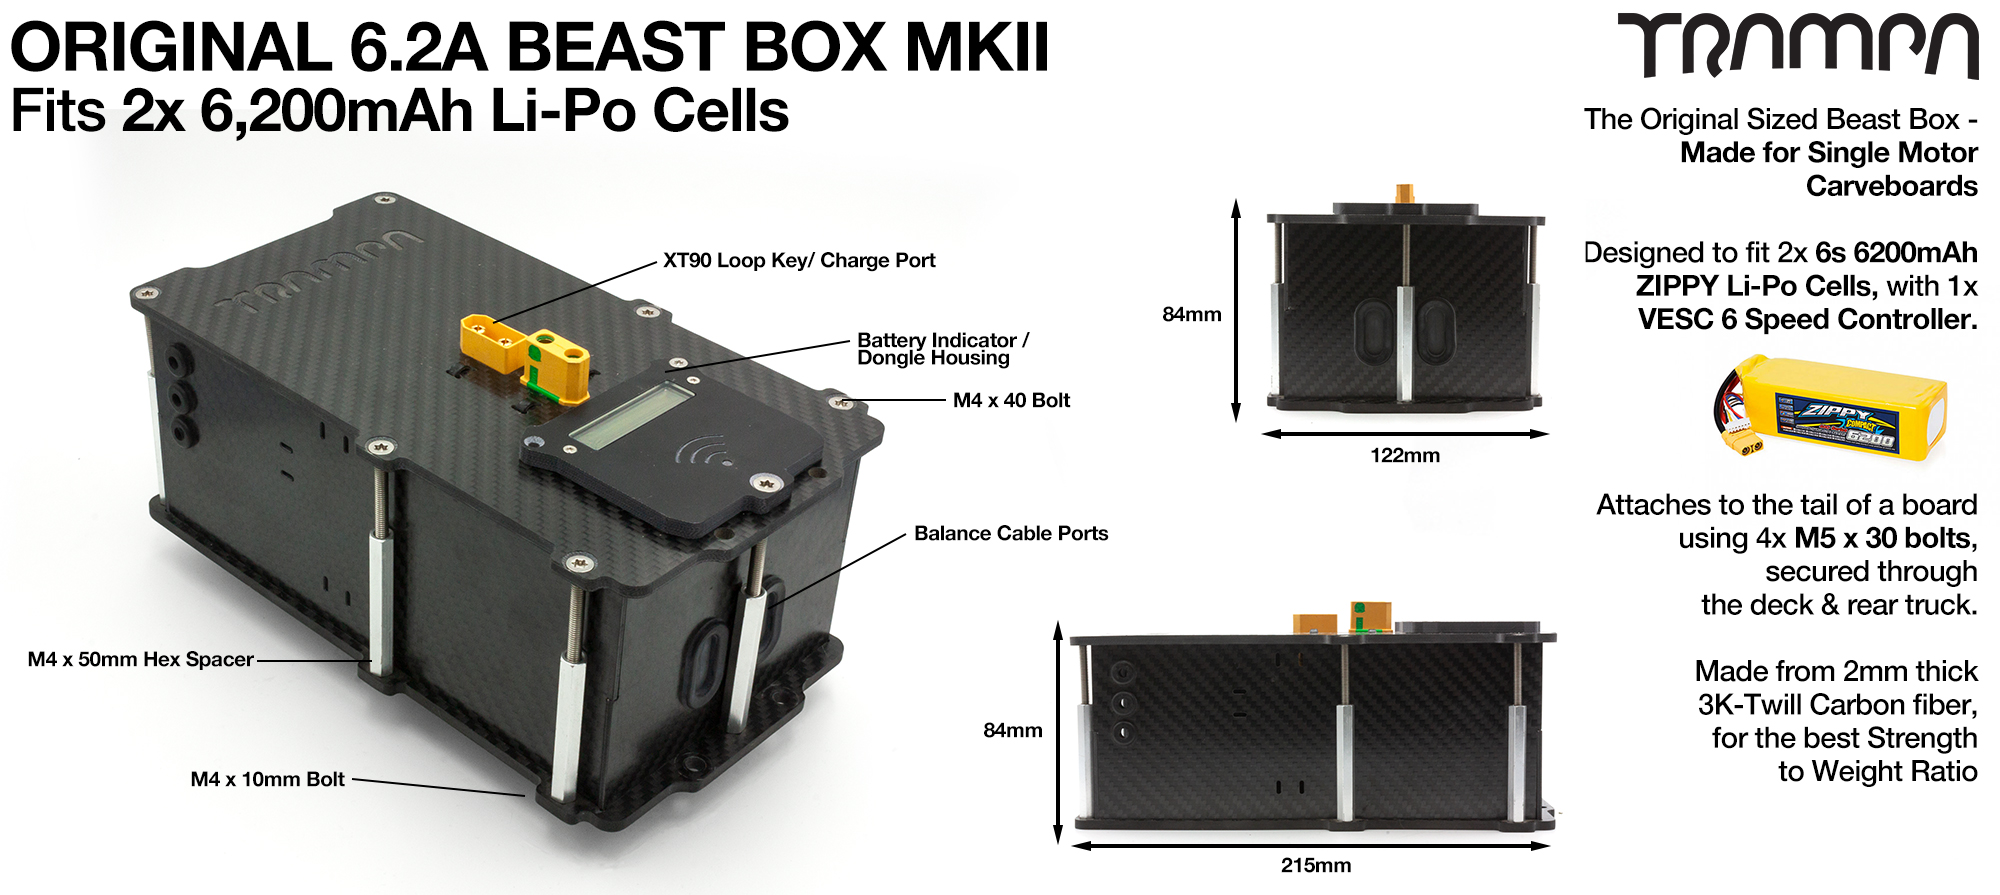 MkII 6.2Ah BEAST Box fits 2x Zippy Compact 6200 mAh cells with Internal VESC Housing 